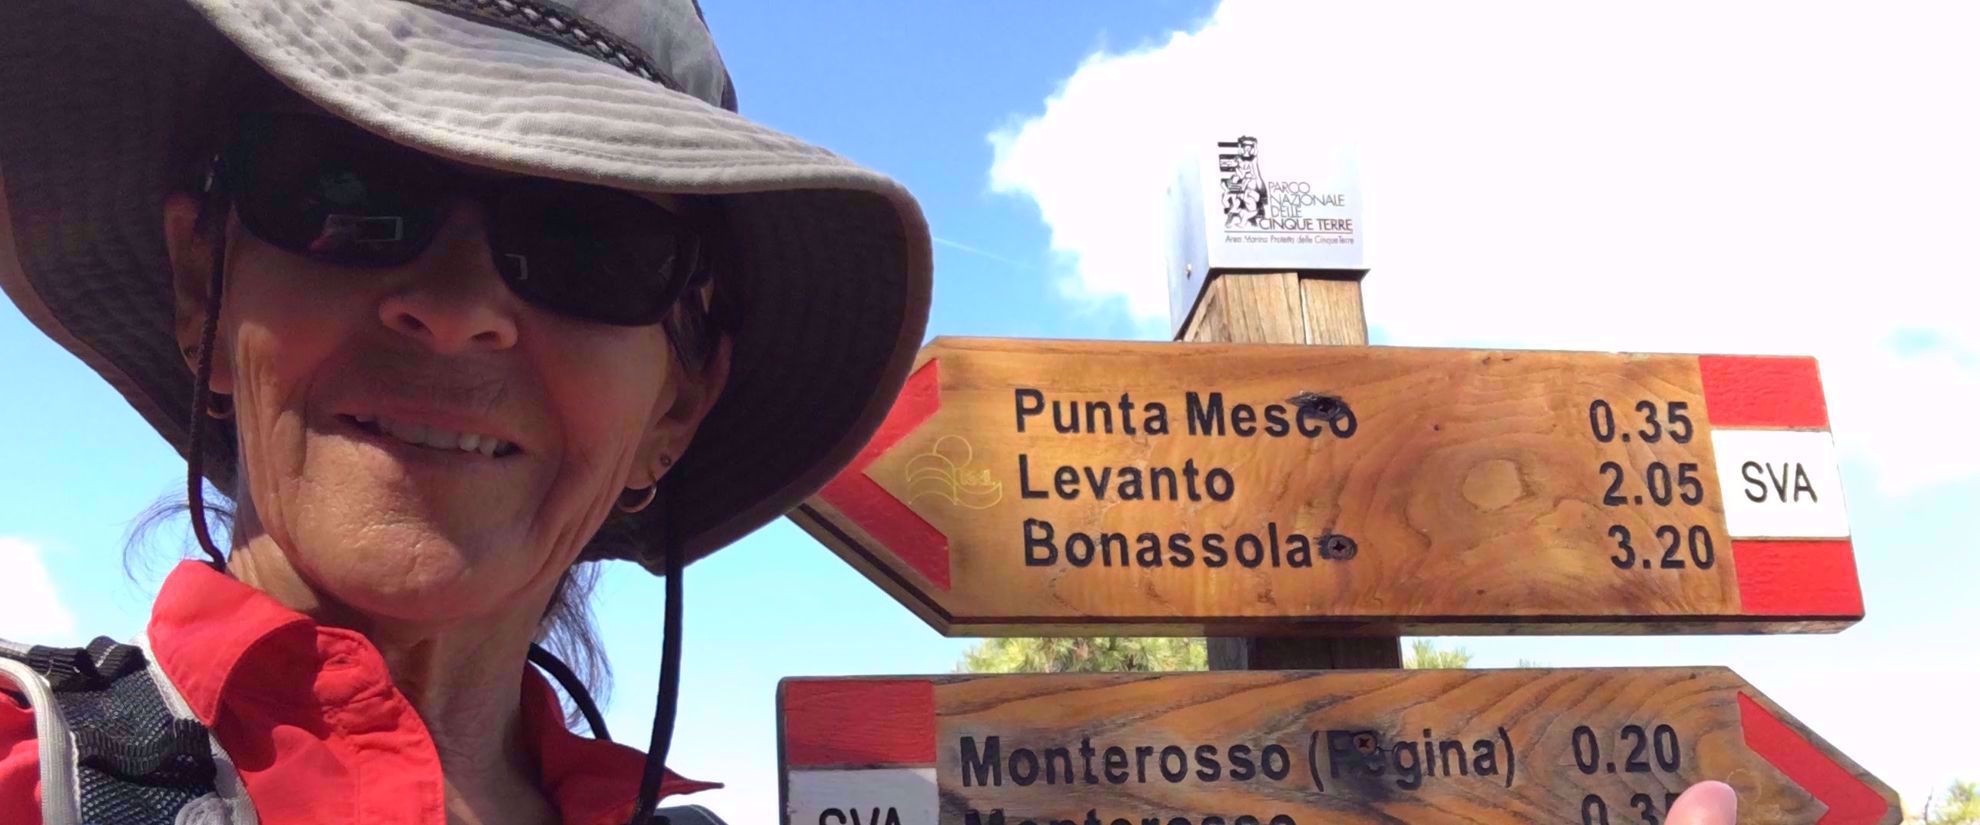 Punta mesca sign in italy